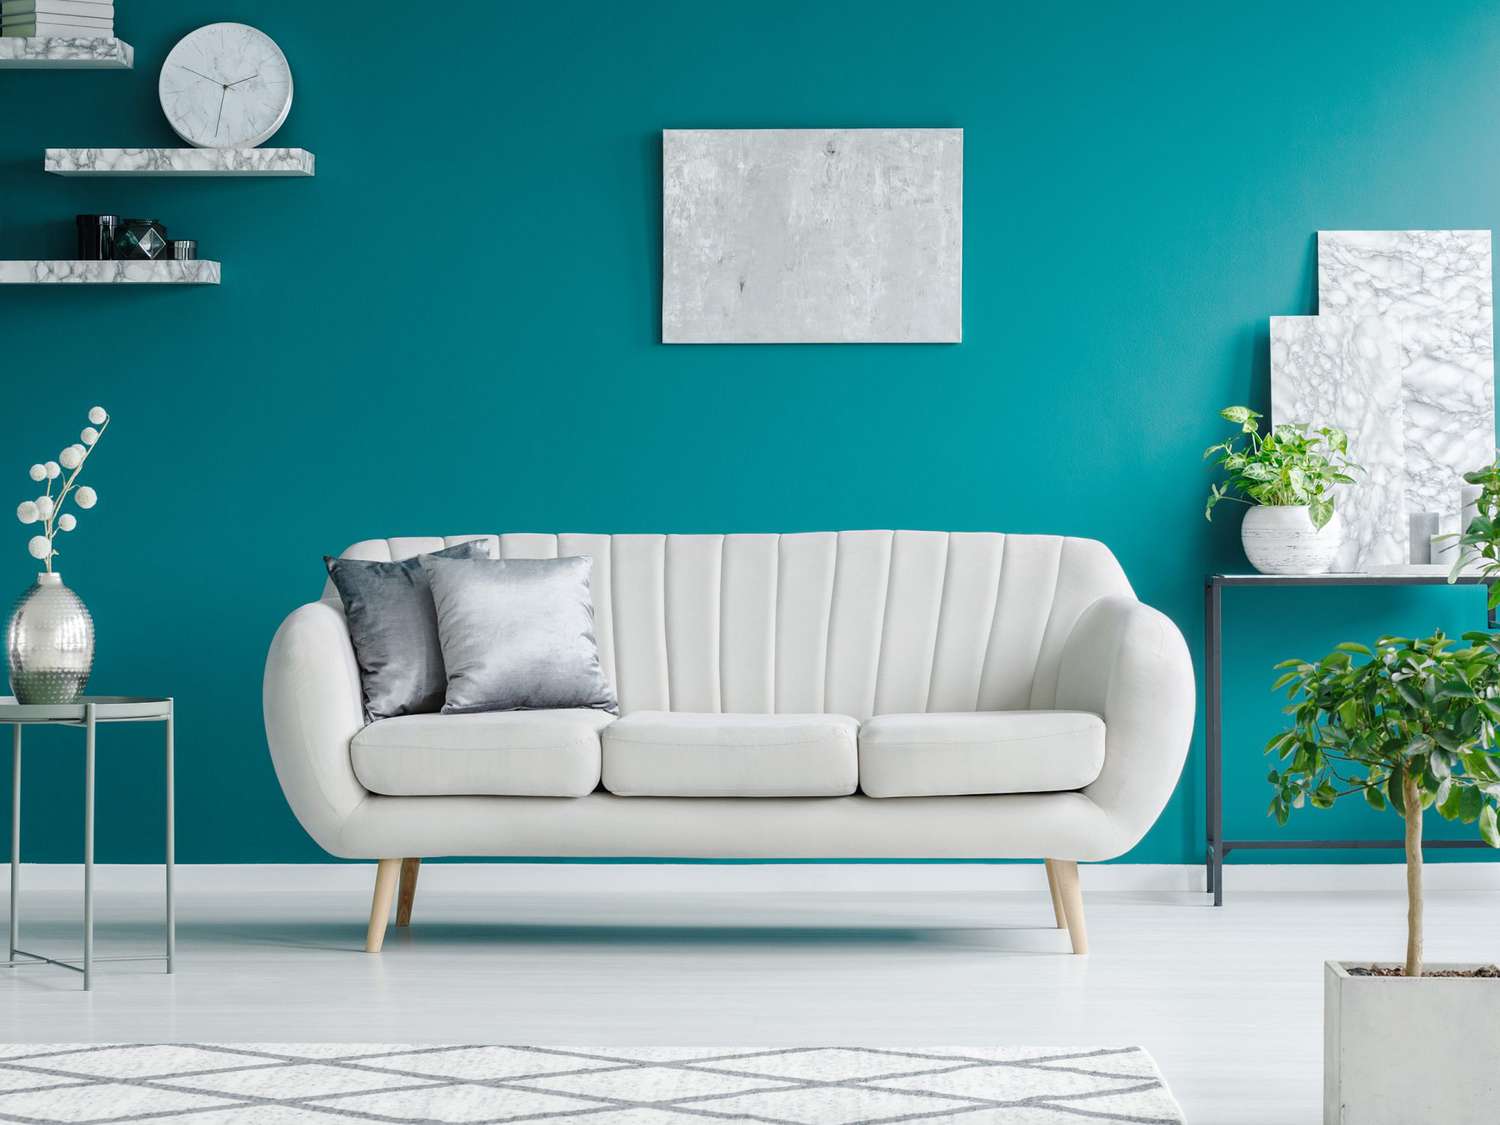 White sofa against teal wall